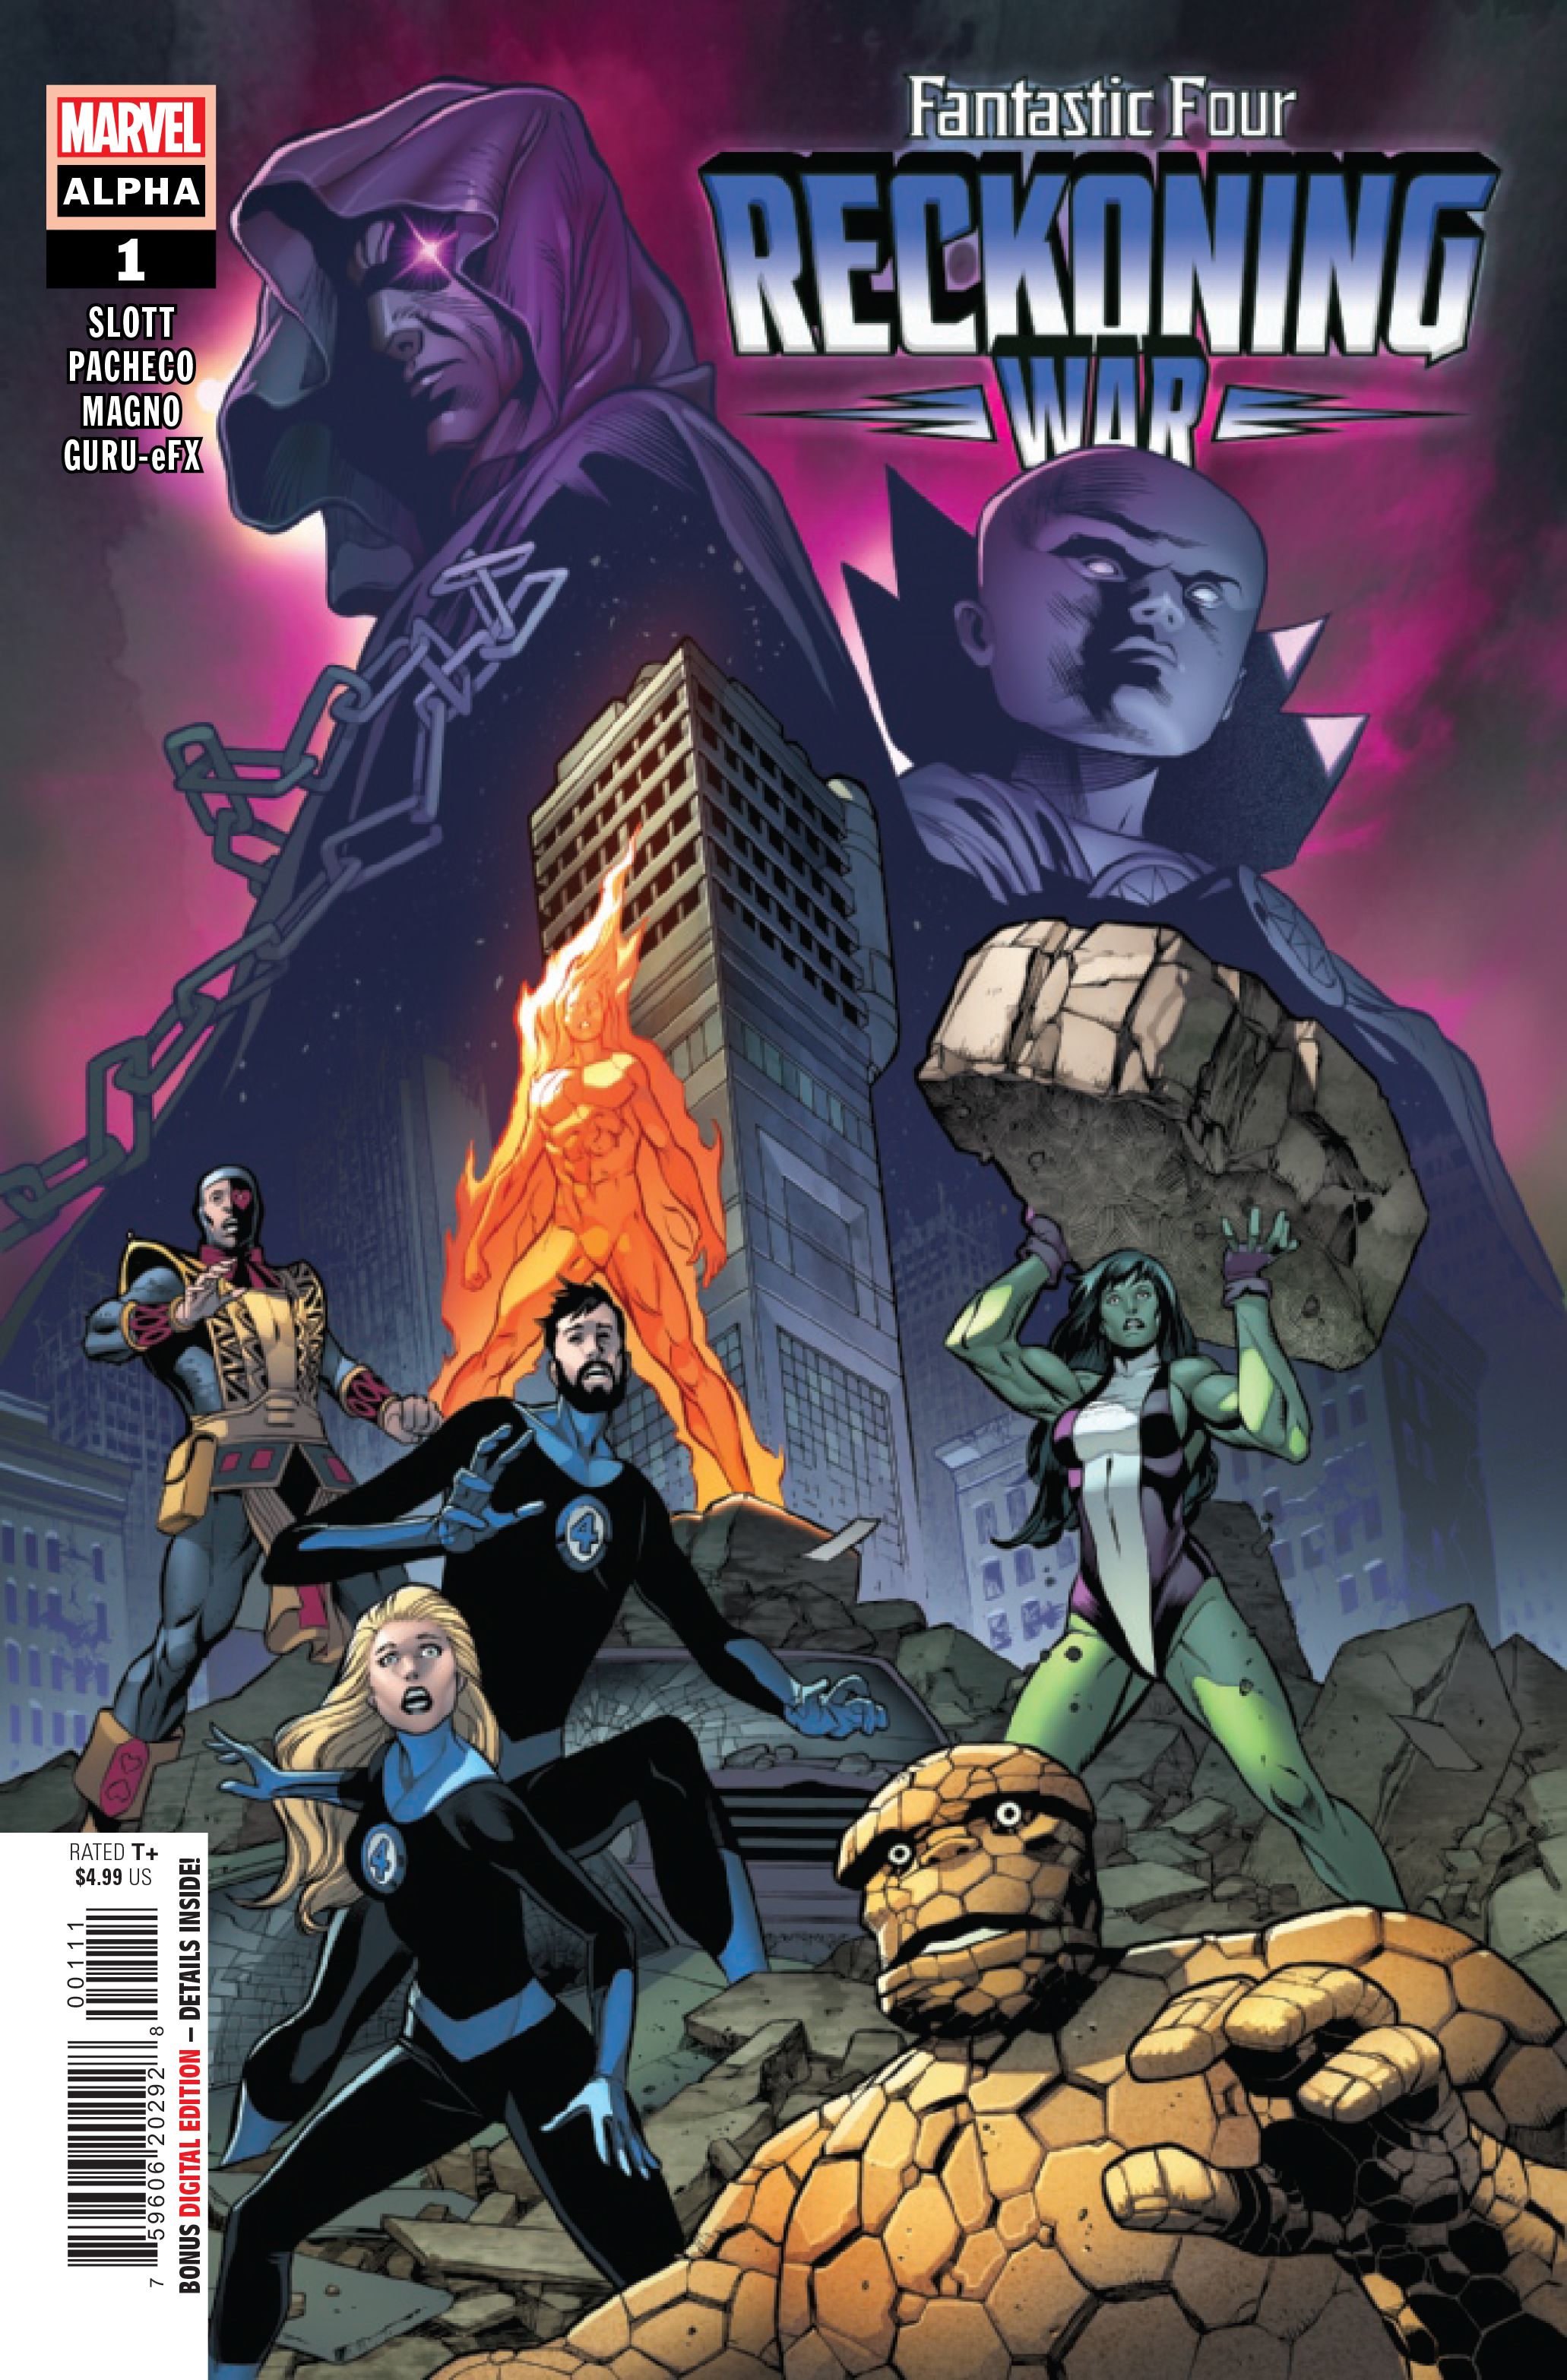 Fantastic Four: Reckoning War Alpha #1 cover.